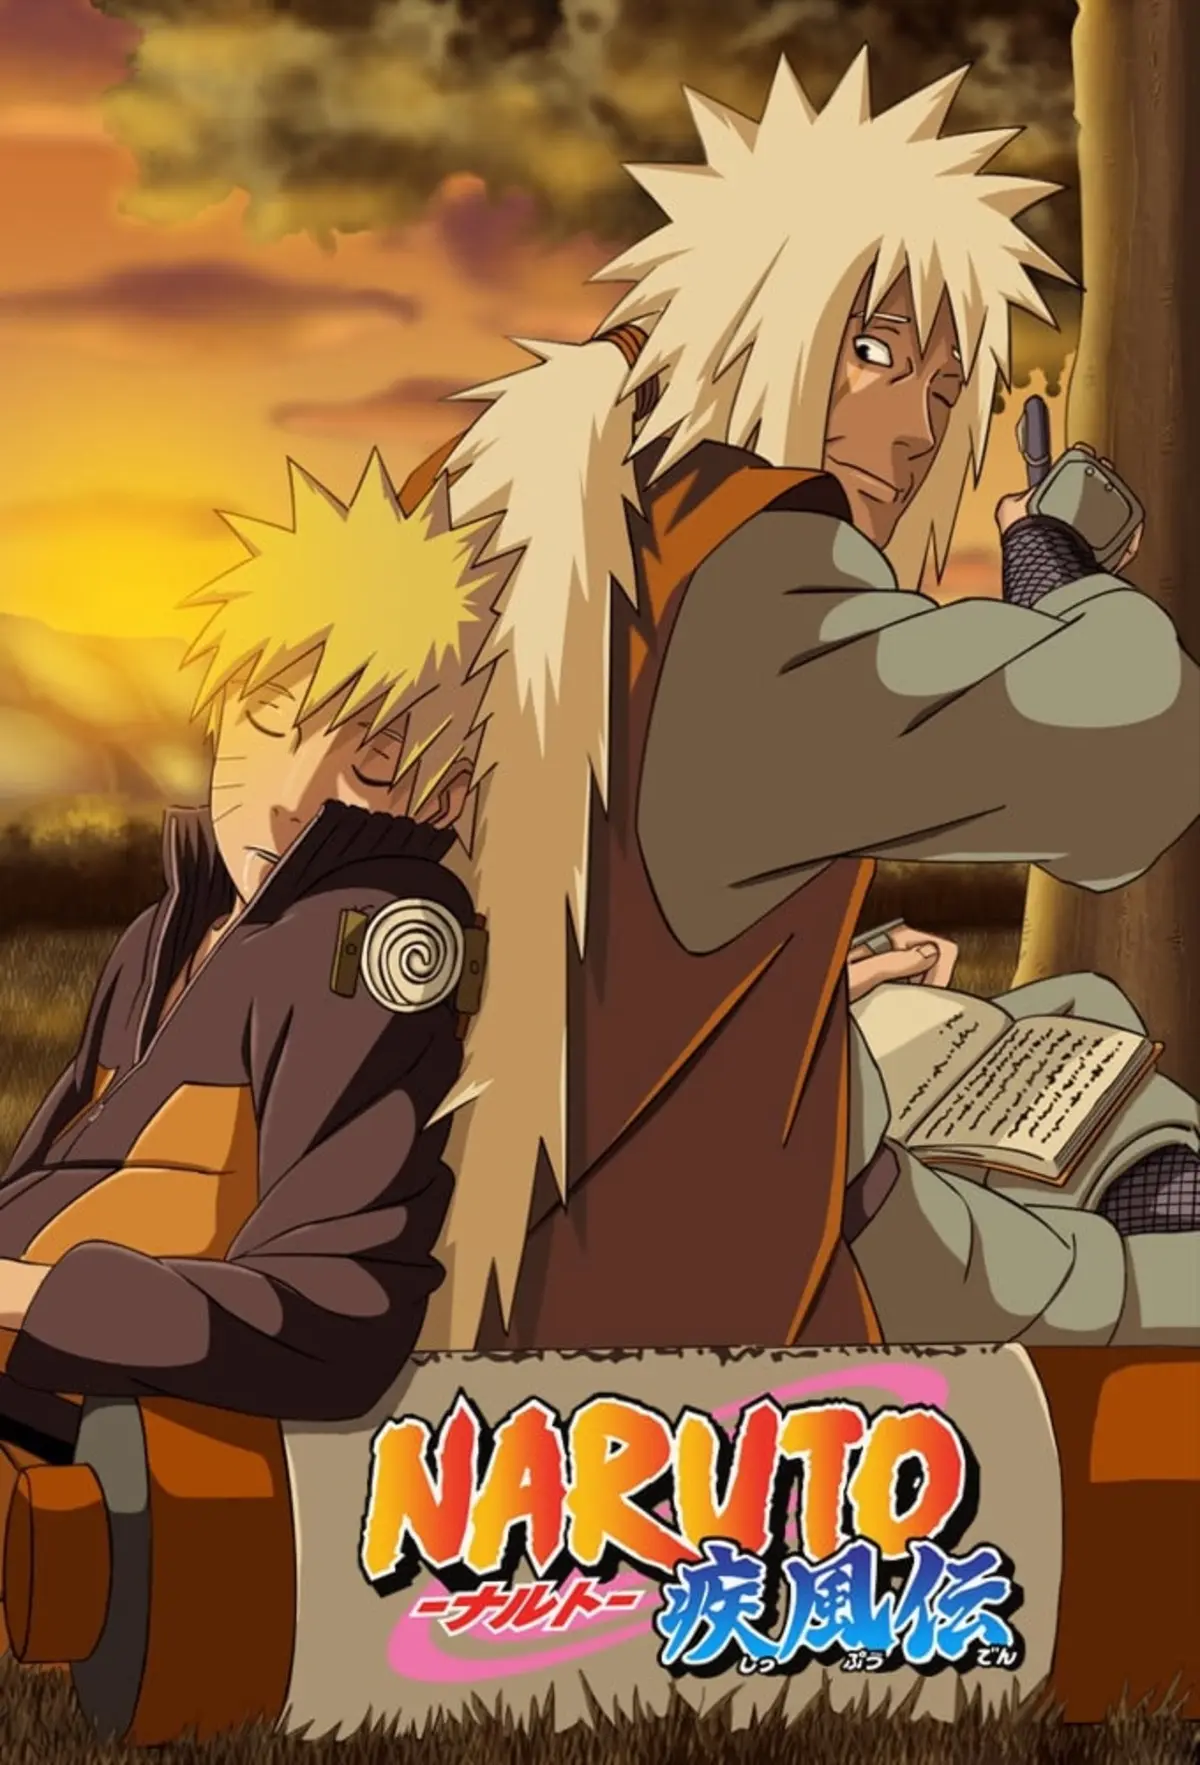 Naruto Shippuden S02E09 Le Début de la mission secrète